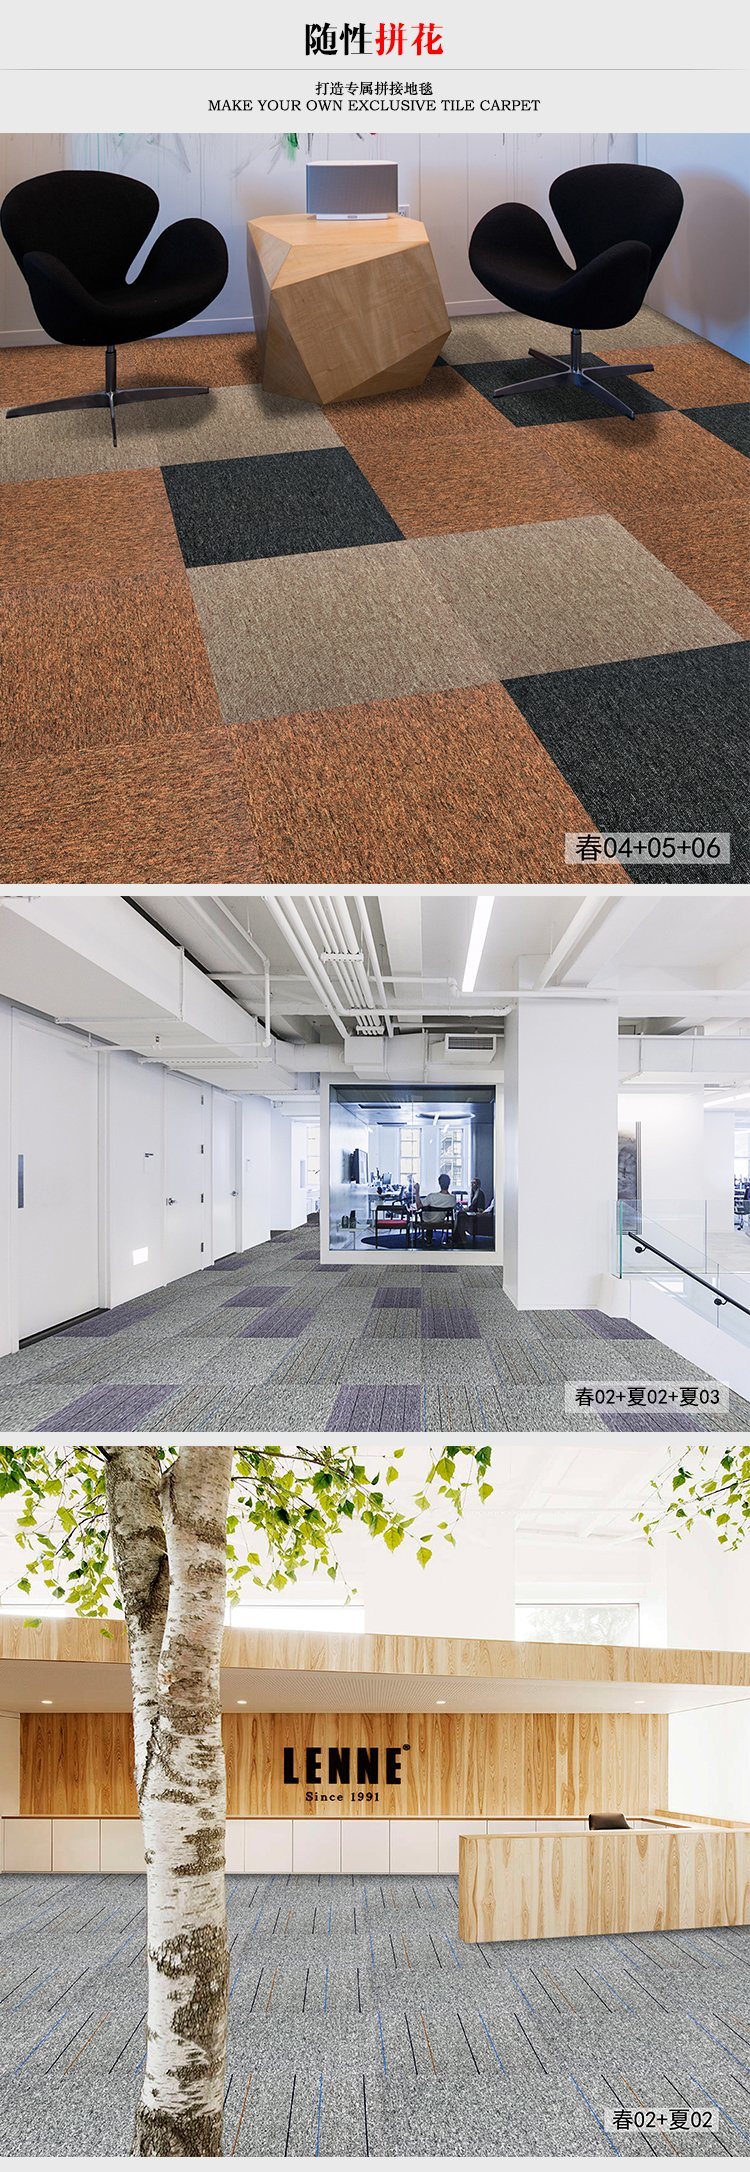 China OEM Tufted Loop Pile Carpet PP Heavy Traffic Carpet Tile for Commercial Office